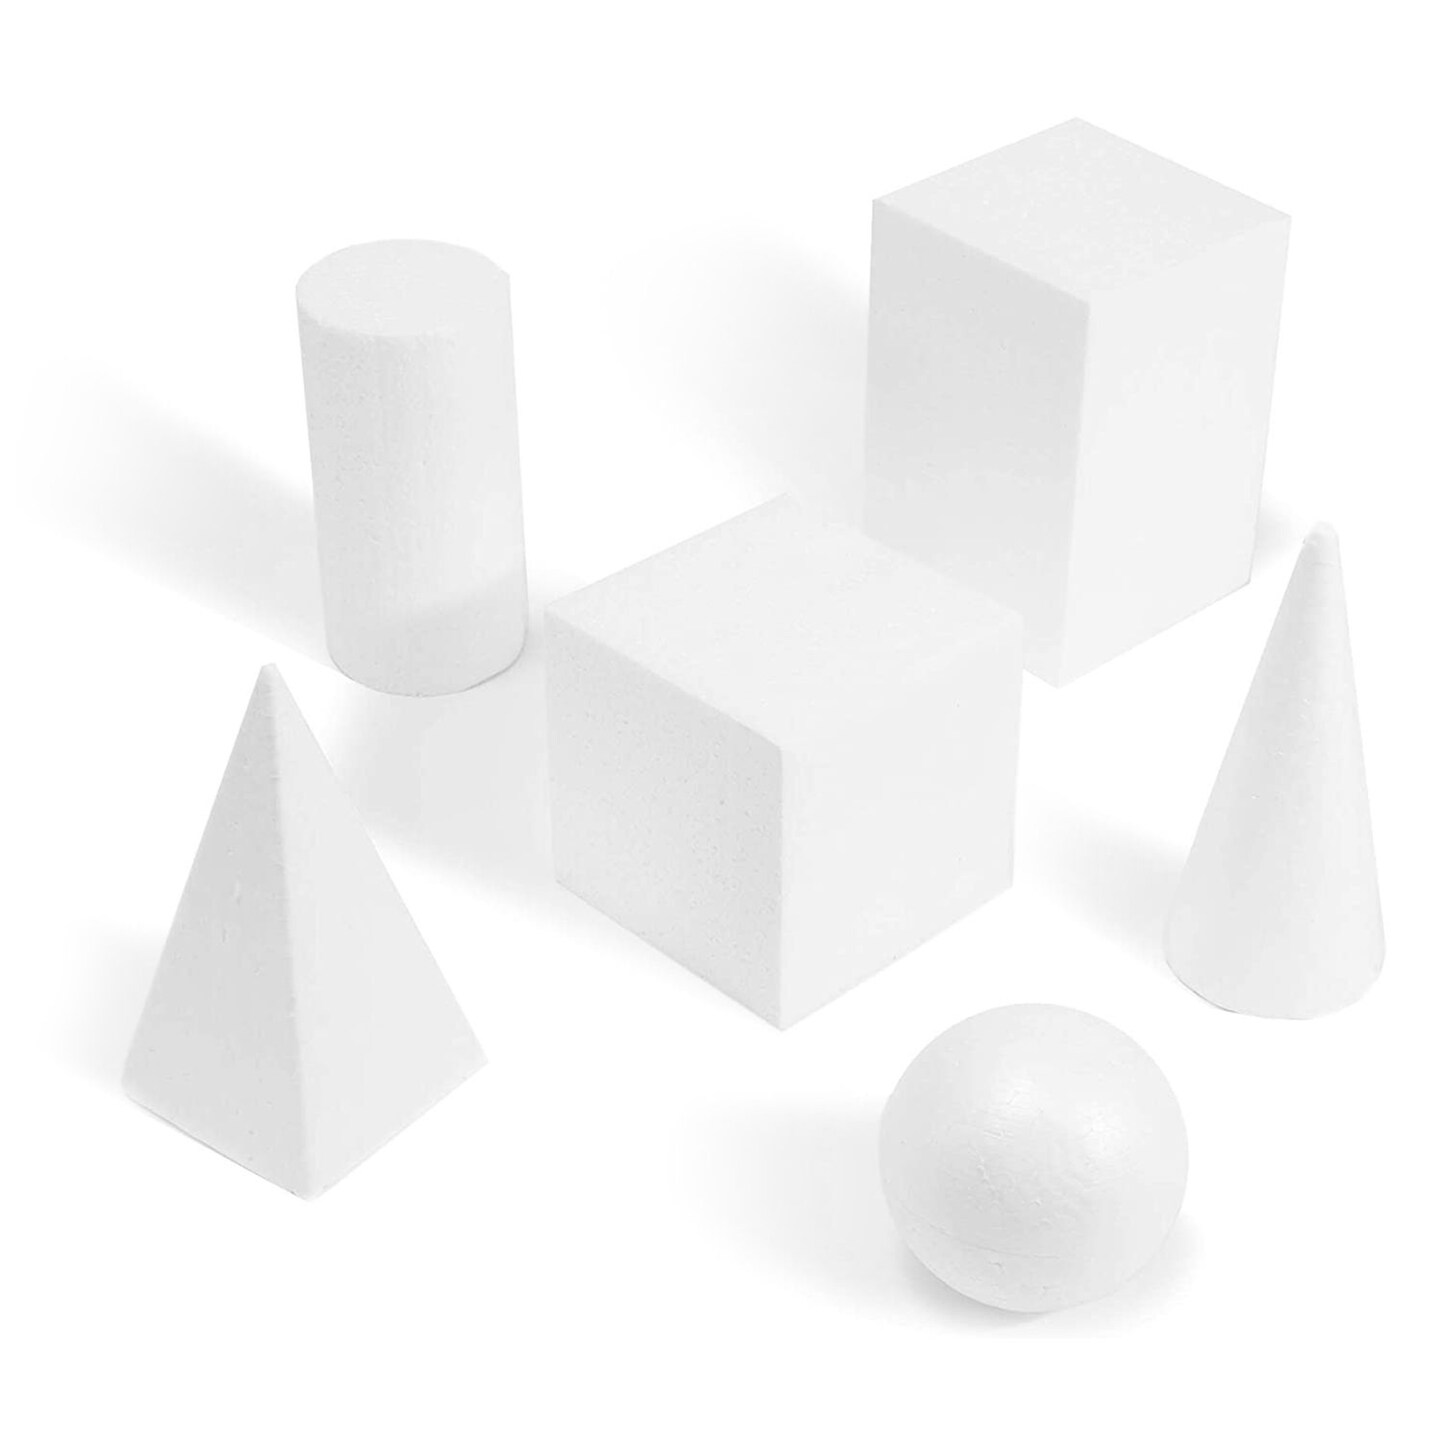 EconoCrafts: Darice Foamies Stepping Stone Kit: Hexagon